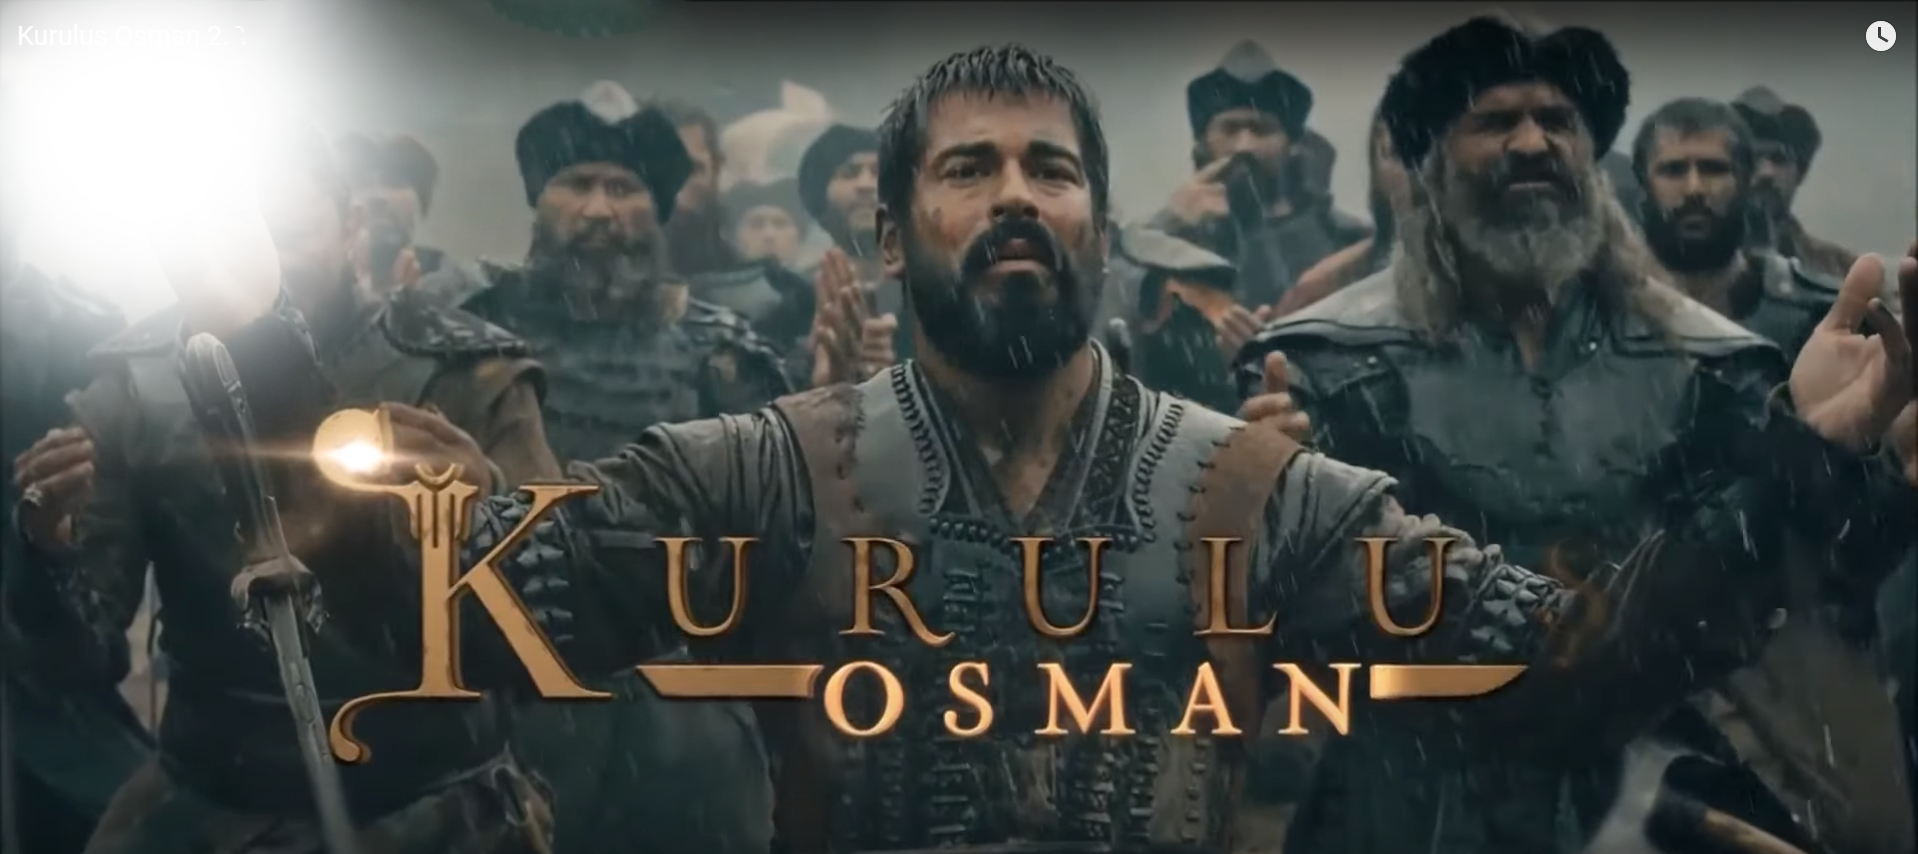 Курулус осман 156